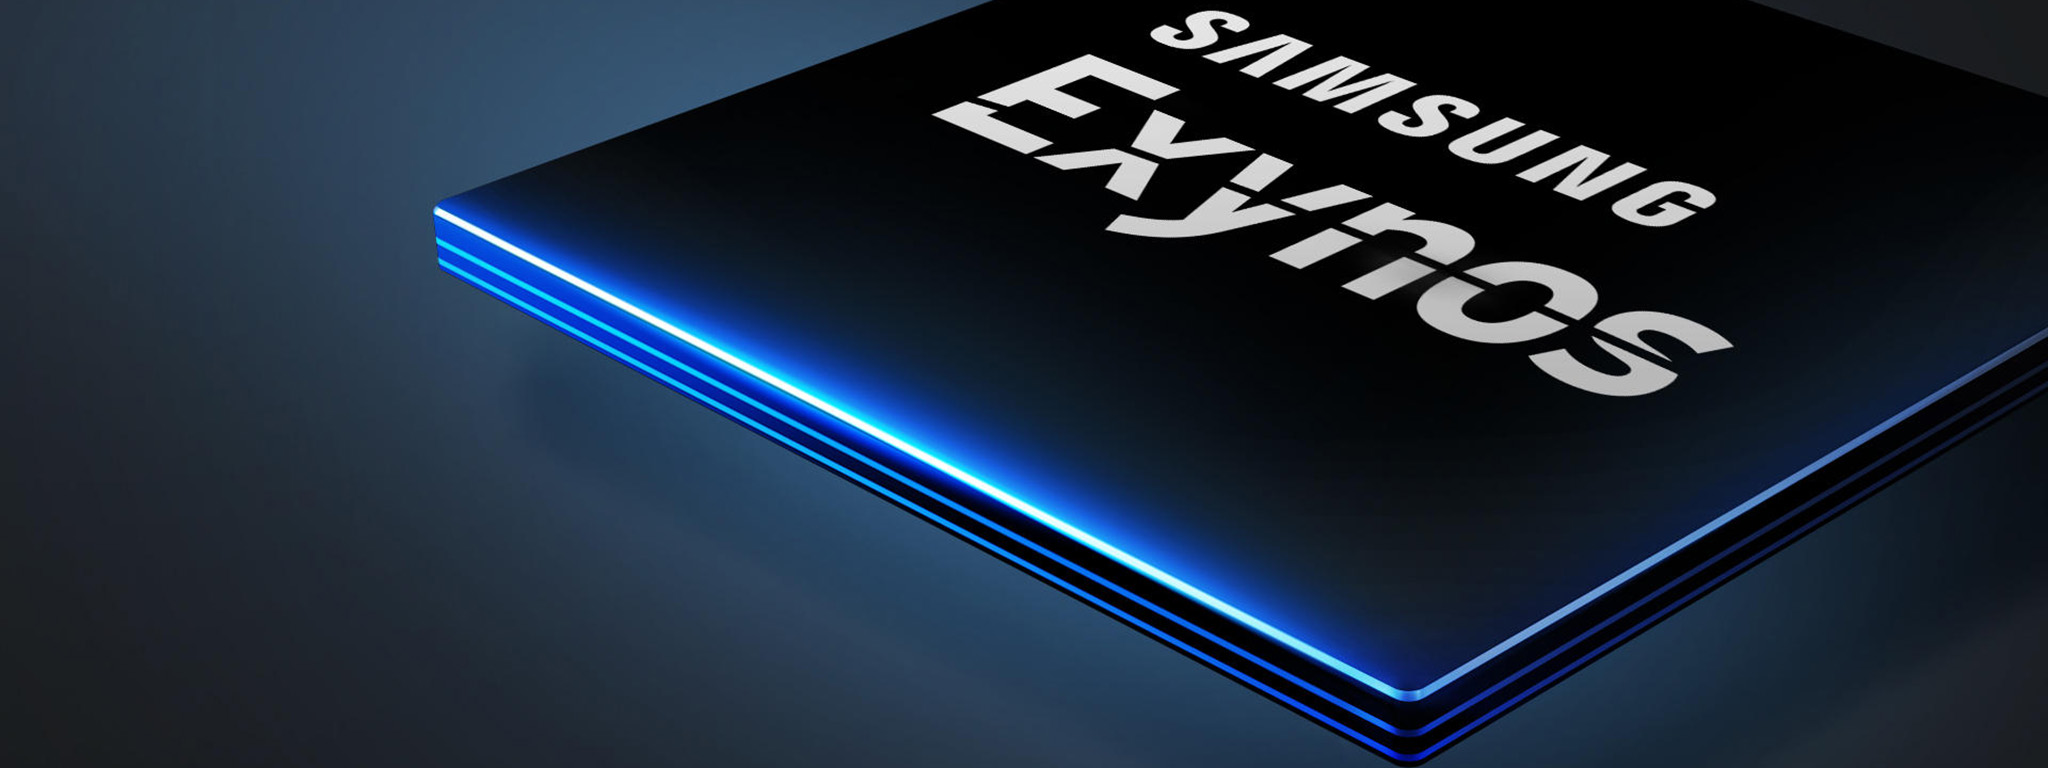 H Samsung Exynos.jpg